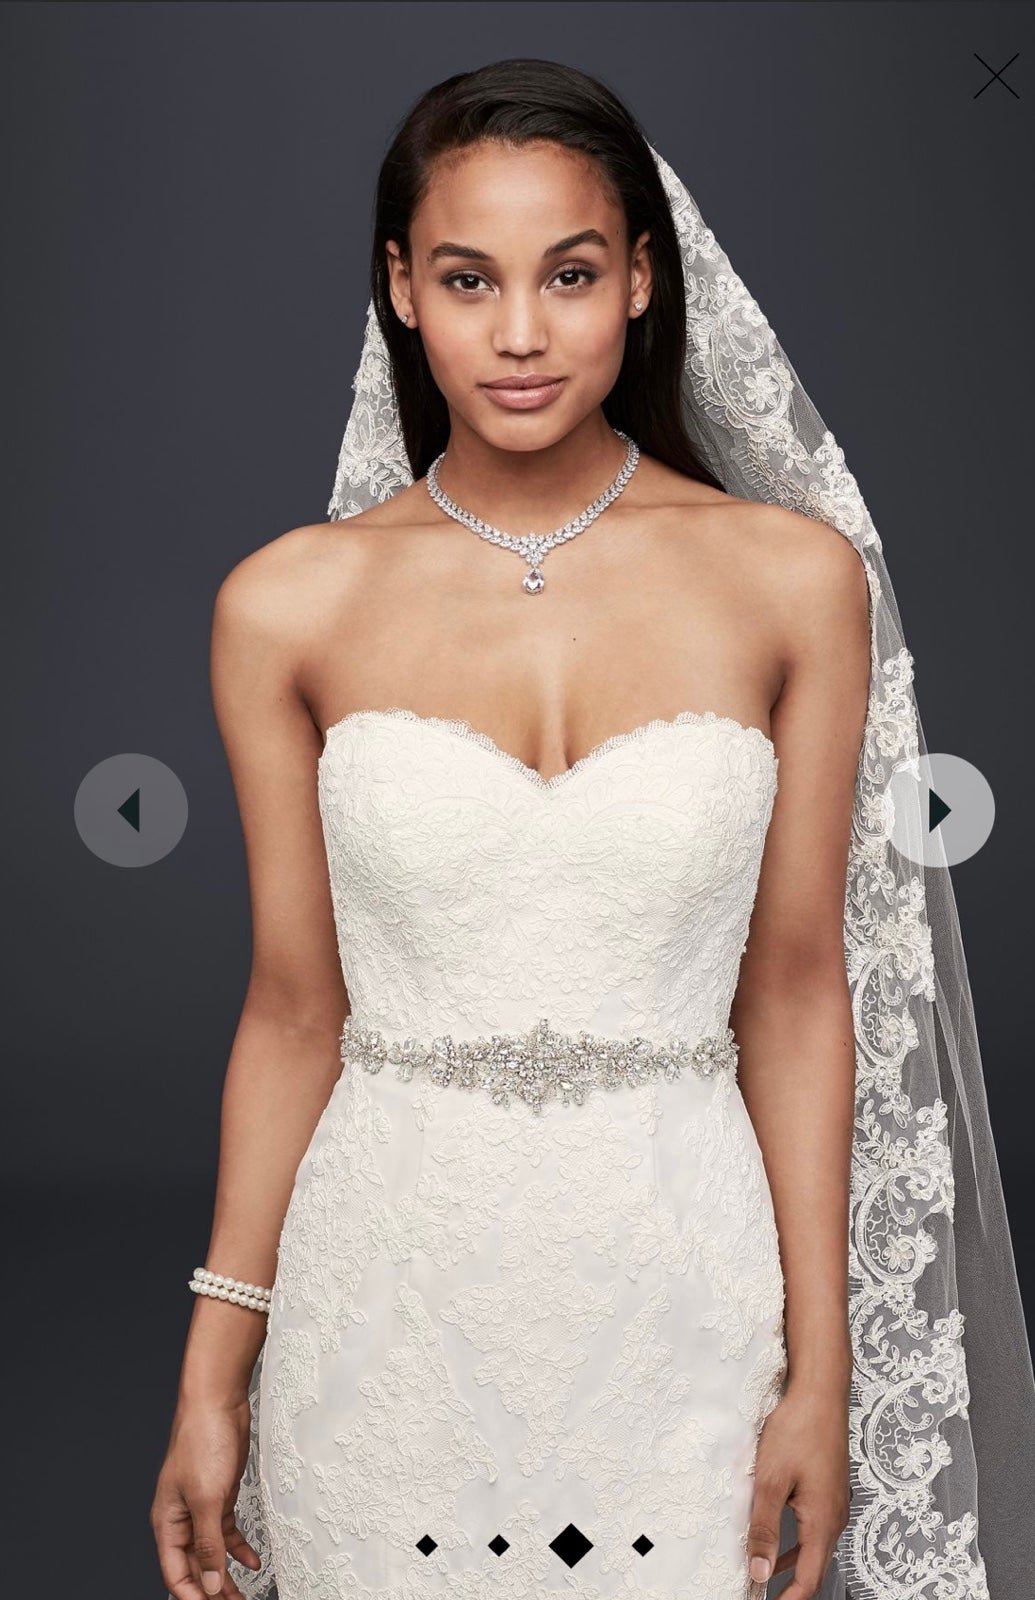 reasonable price soft white lace strapless trumpet wedding dress 4 PETITE iA9tTAZ9P hot sale